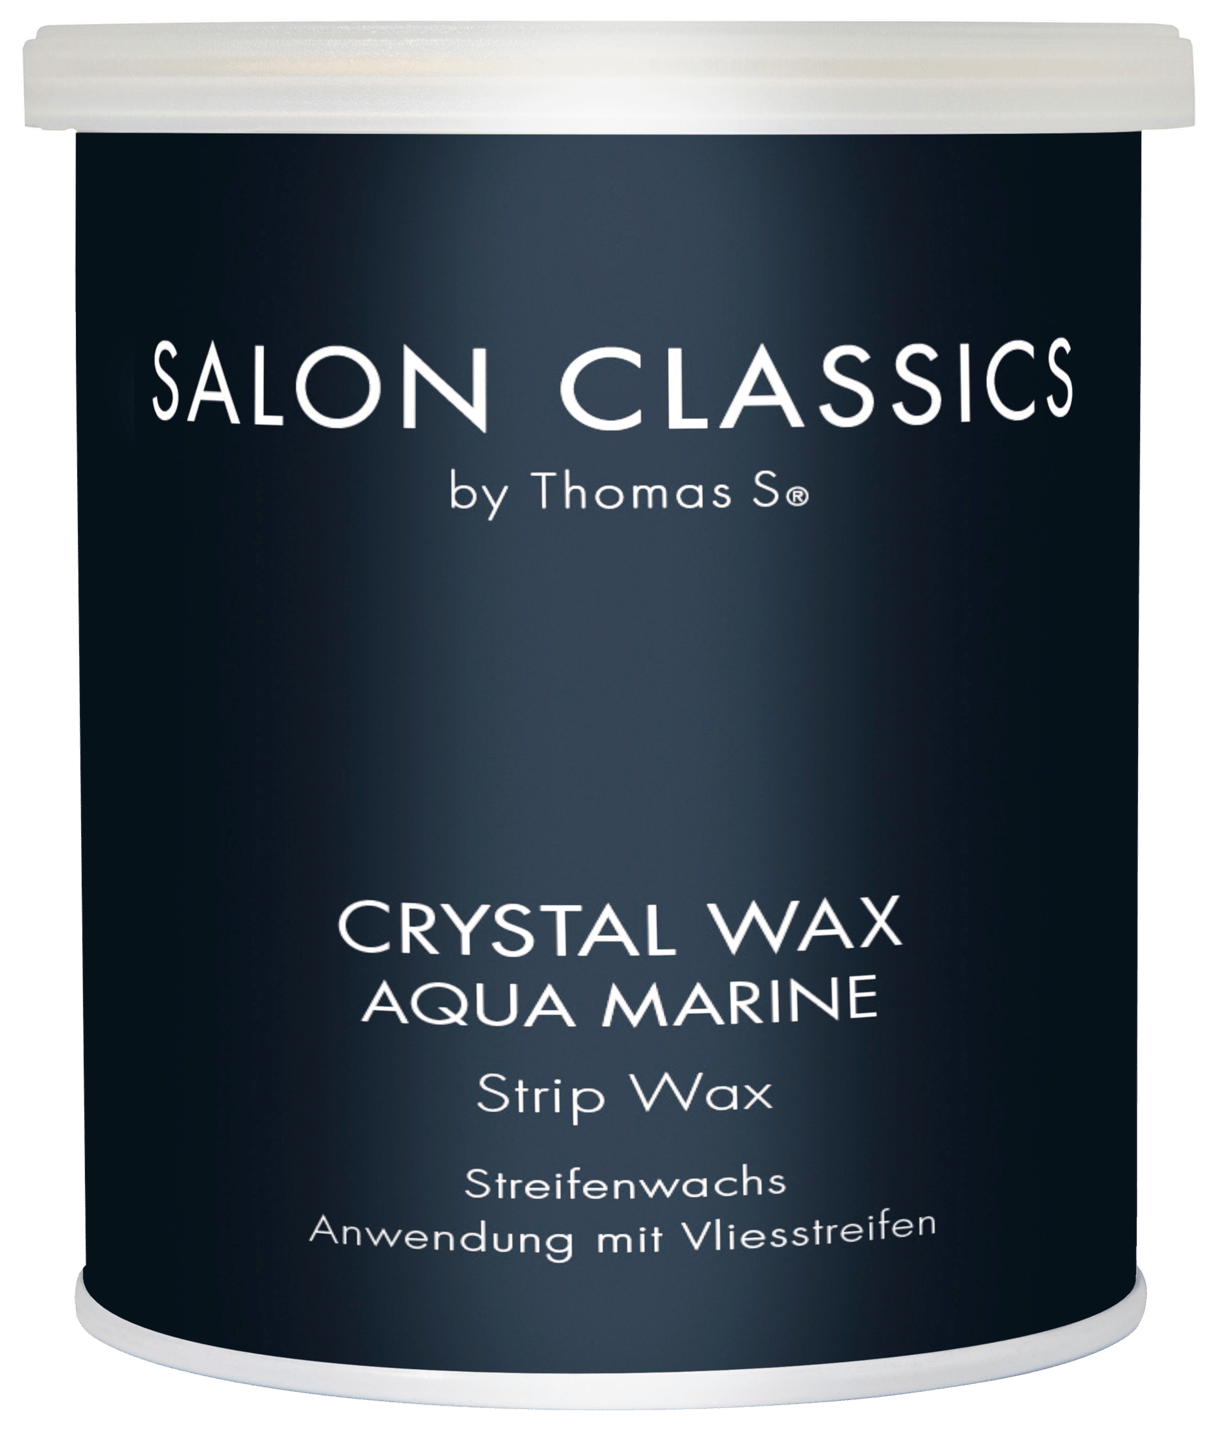 Salon Classics - Crystal Wax Aqua Marine, 800 g